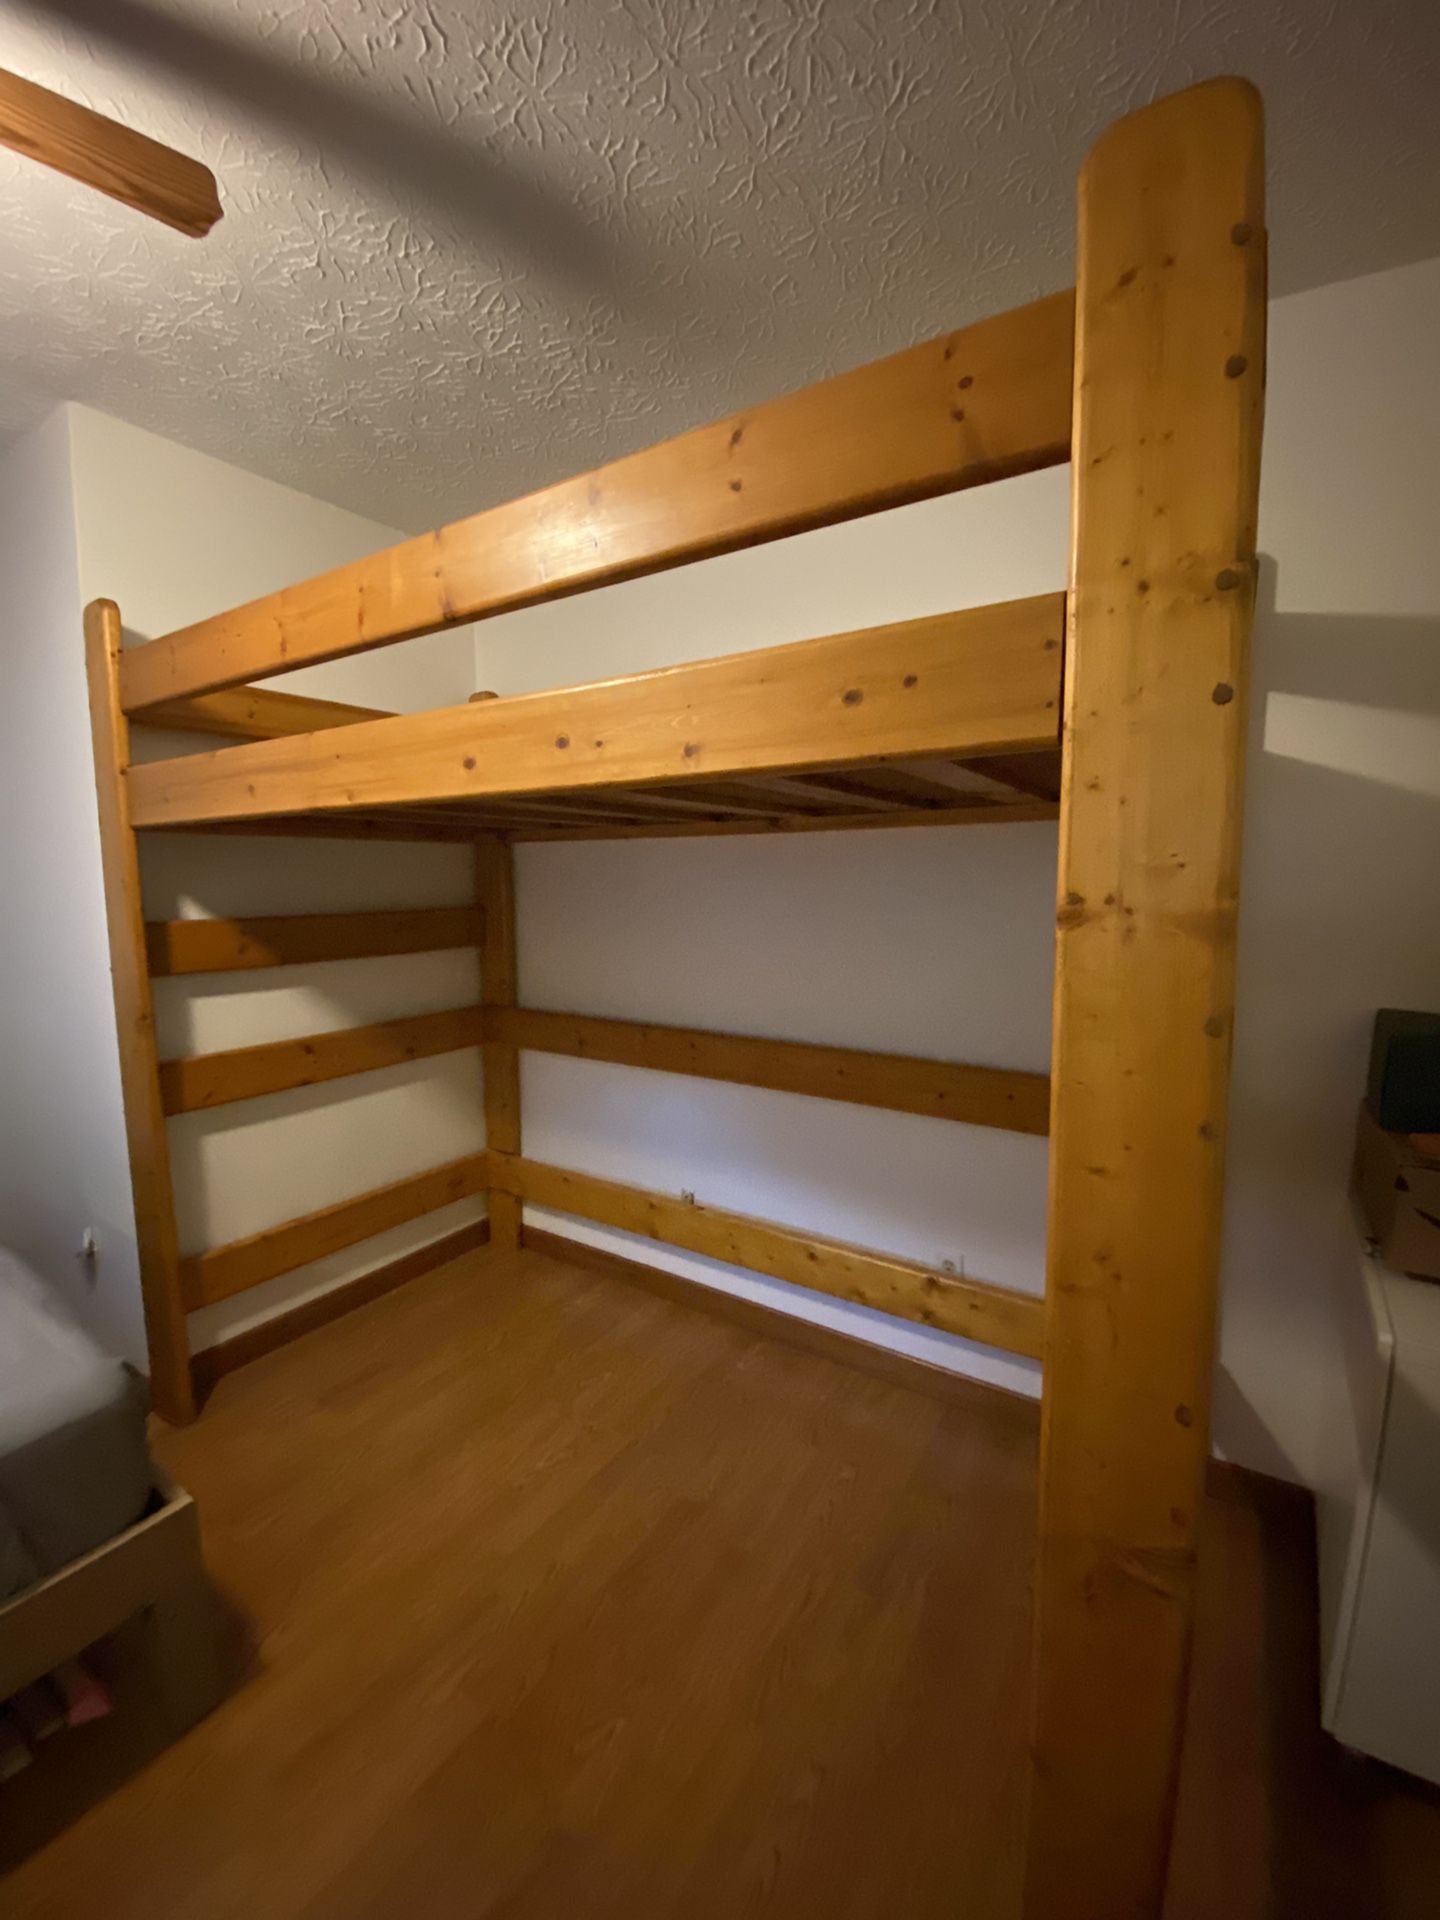 Bedroom Loft - Bunk Bed